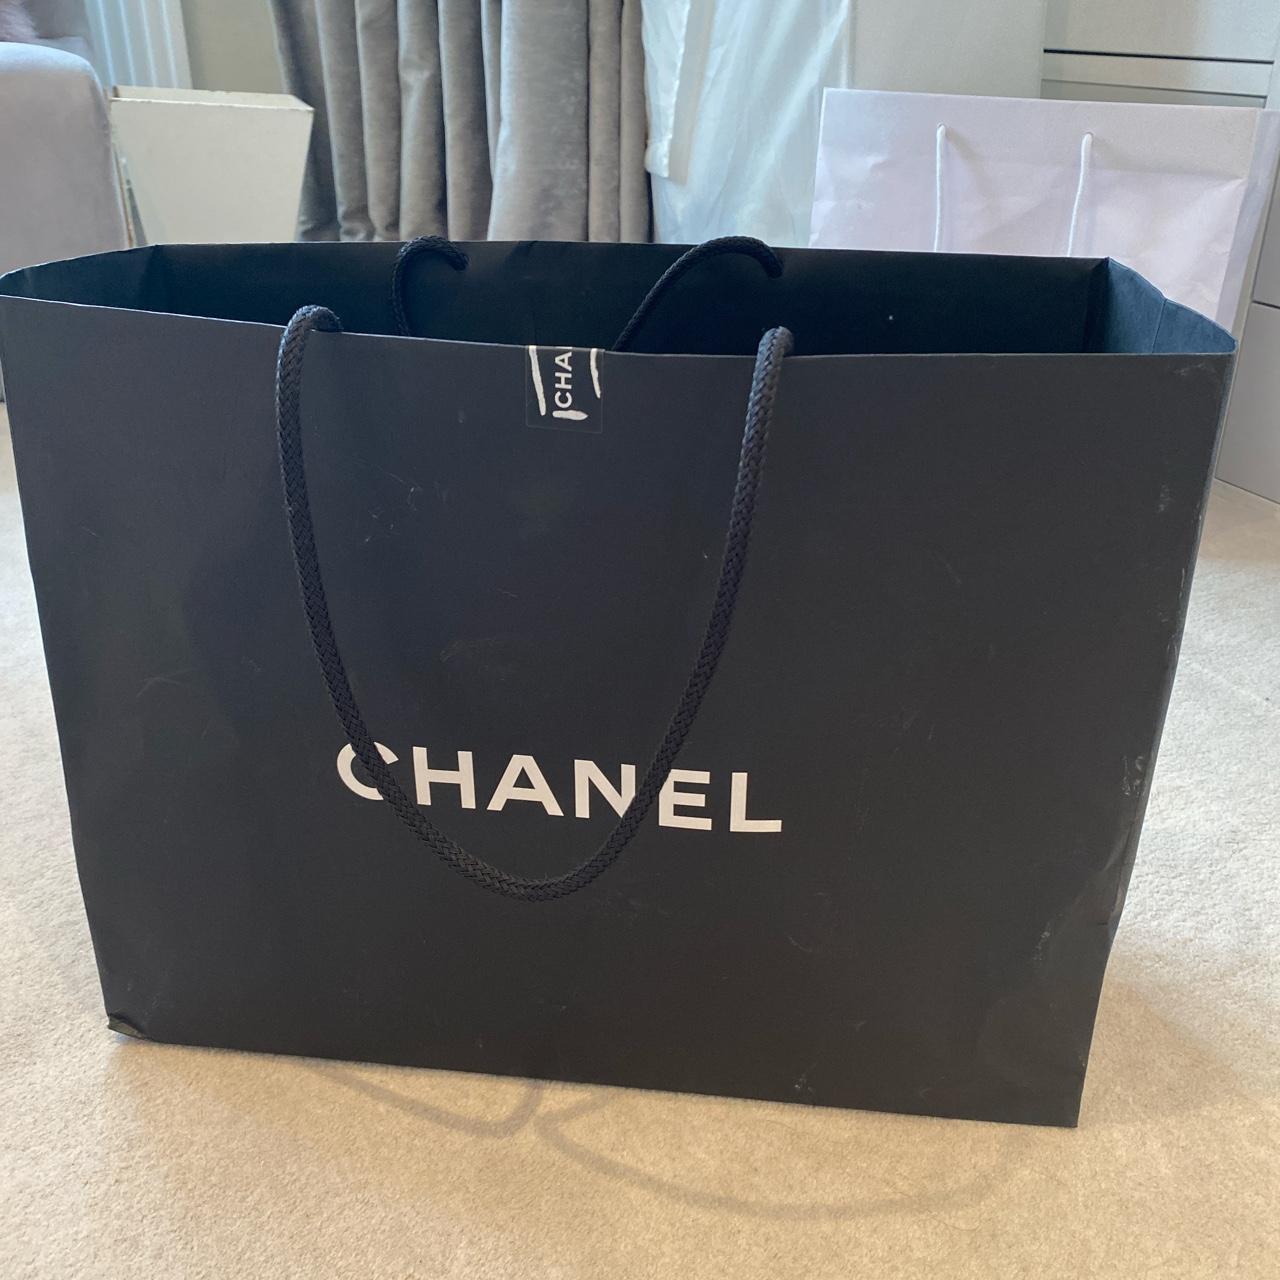 Large Chanel gift bag✨, 33 x 42 cm, Slight worn as